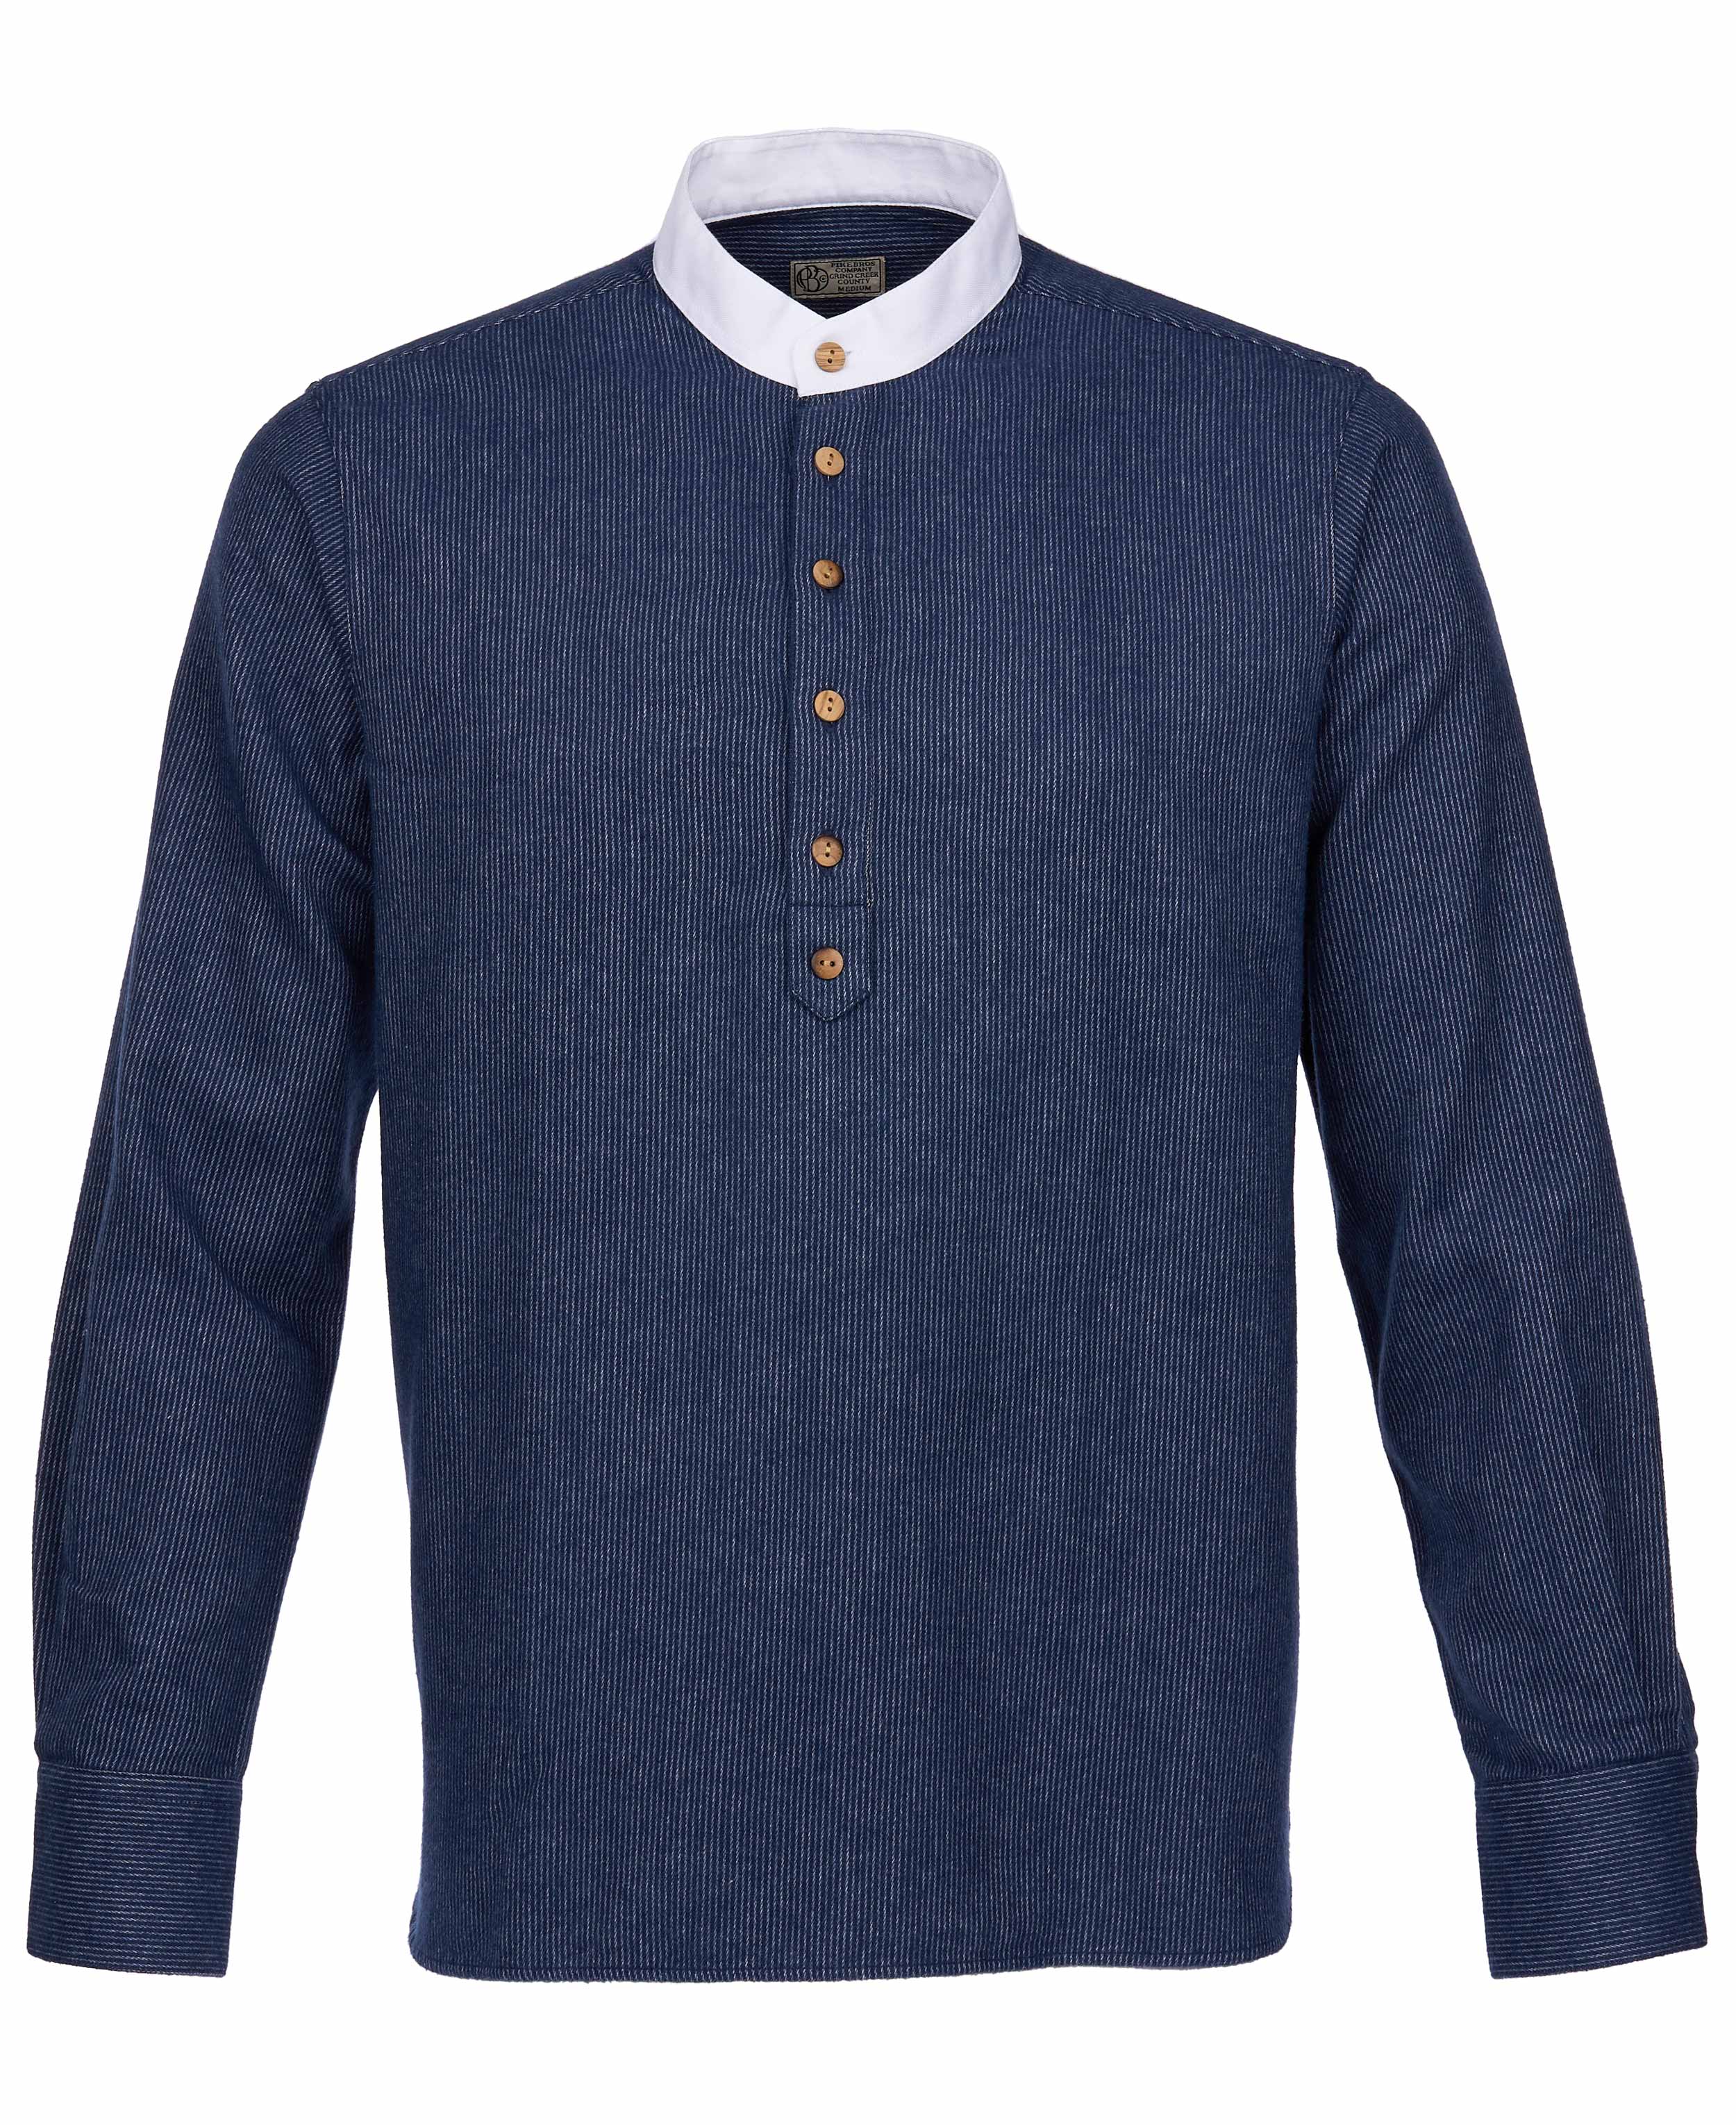 1923 Buccaneer Shirt Oregon blue